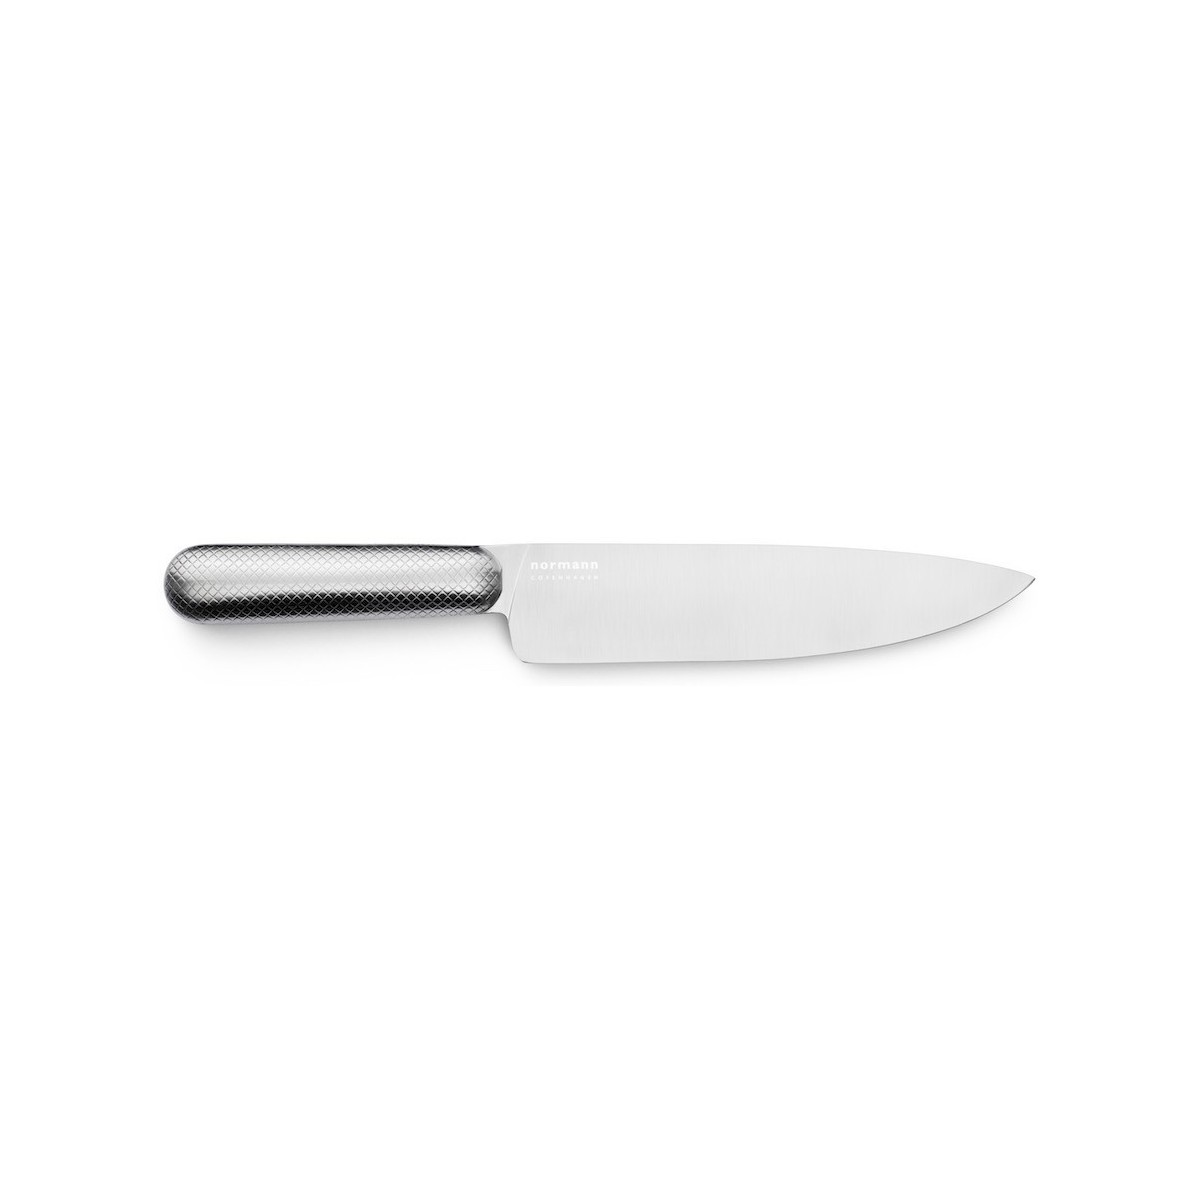 Mesh chef's knife